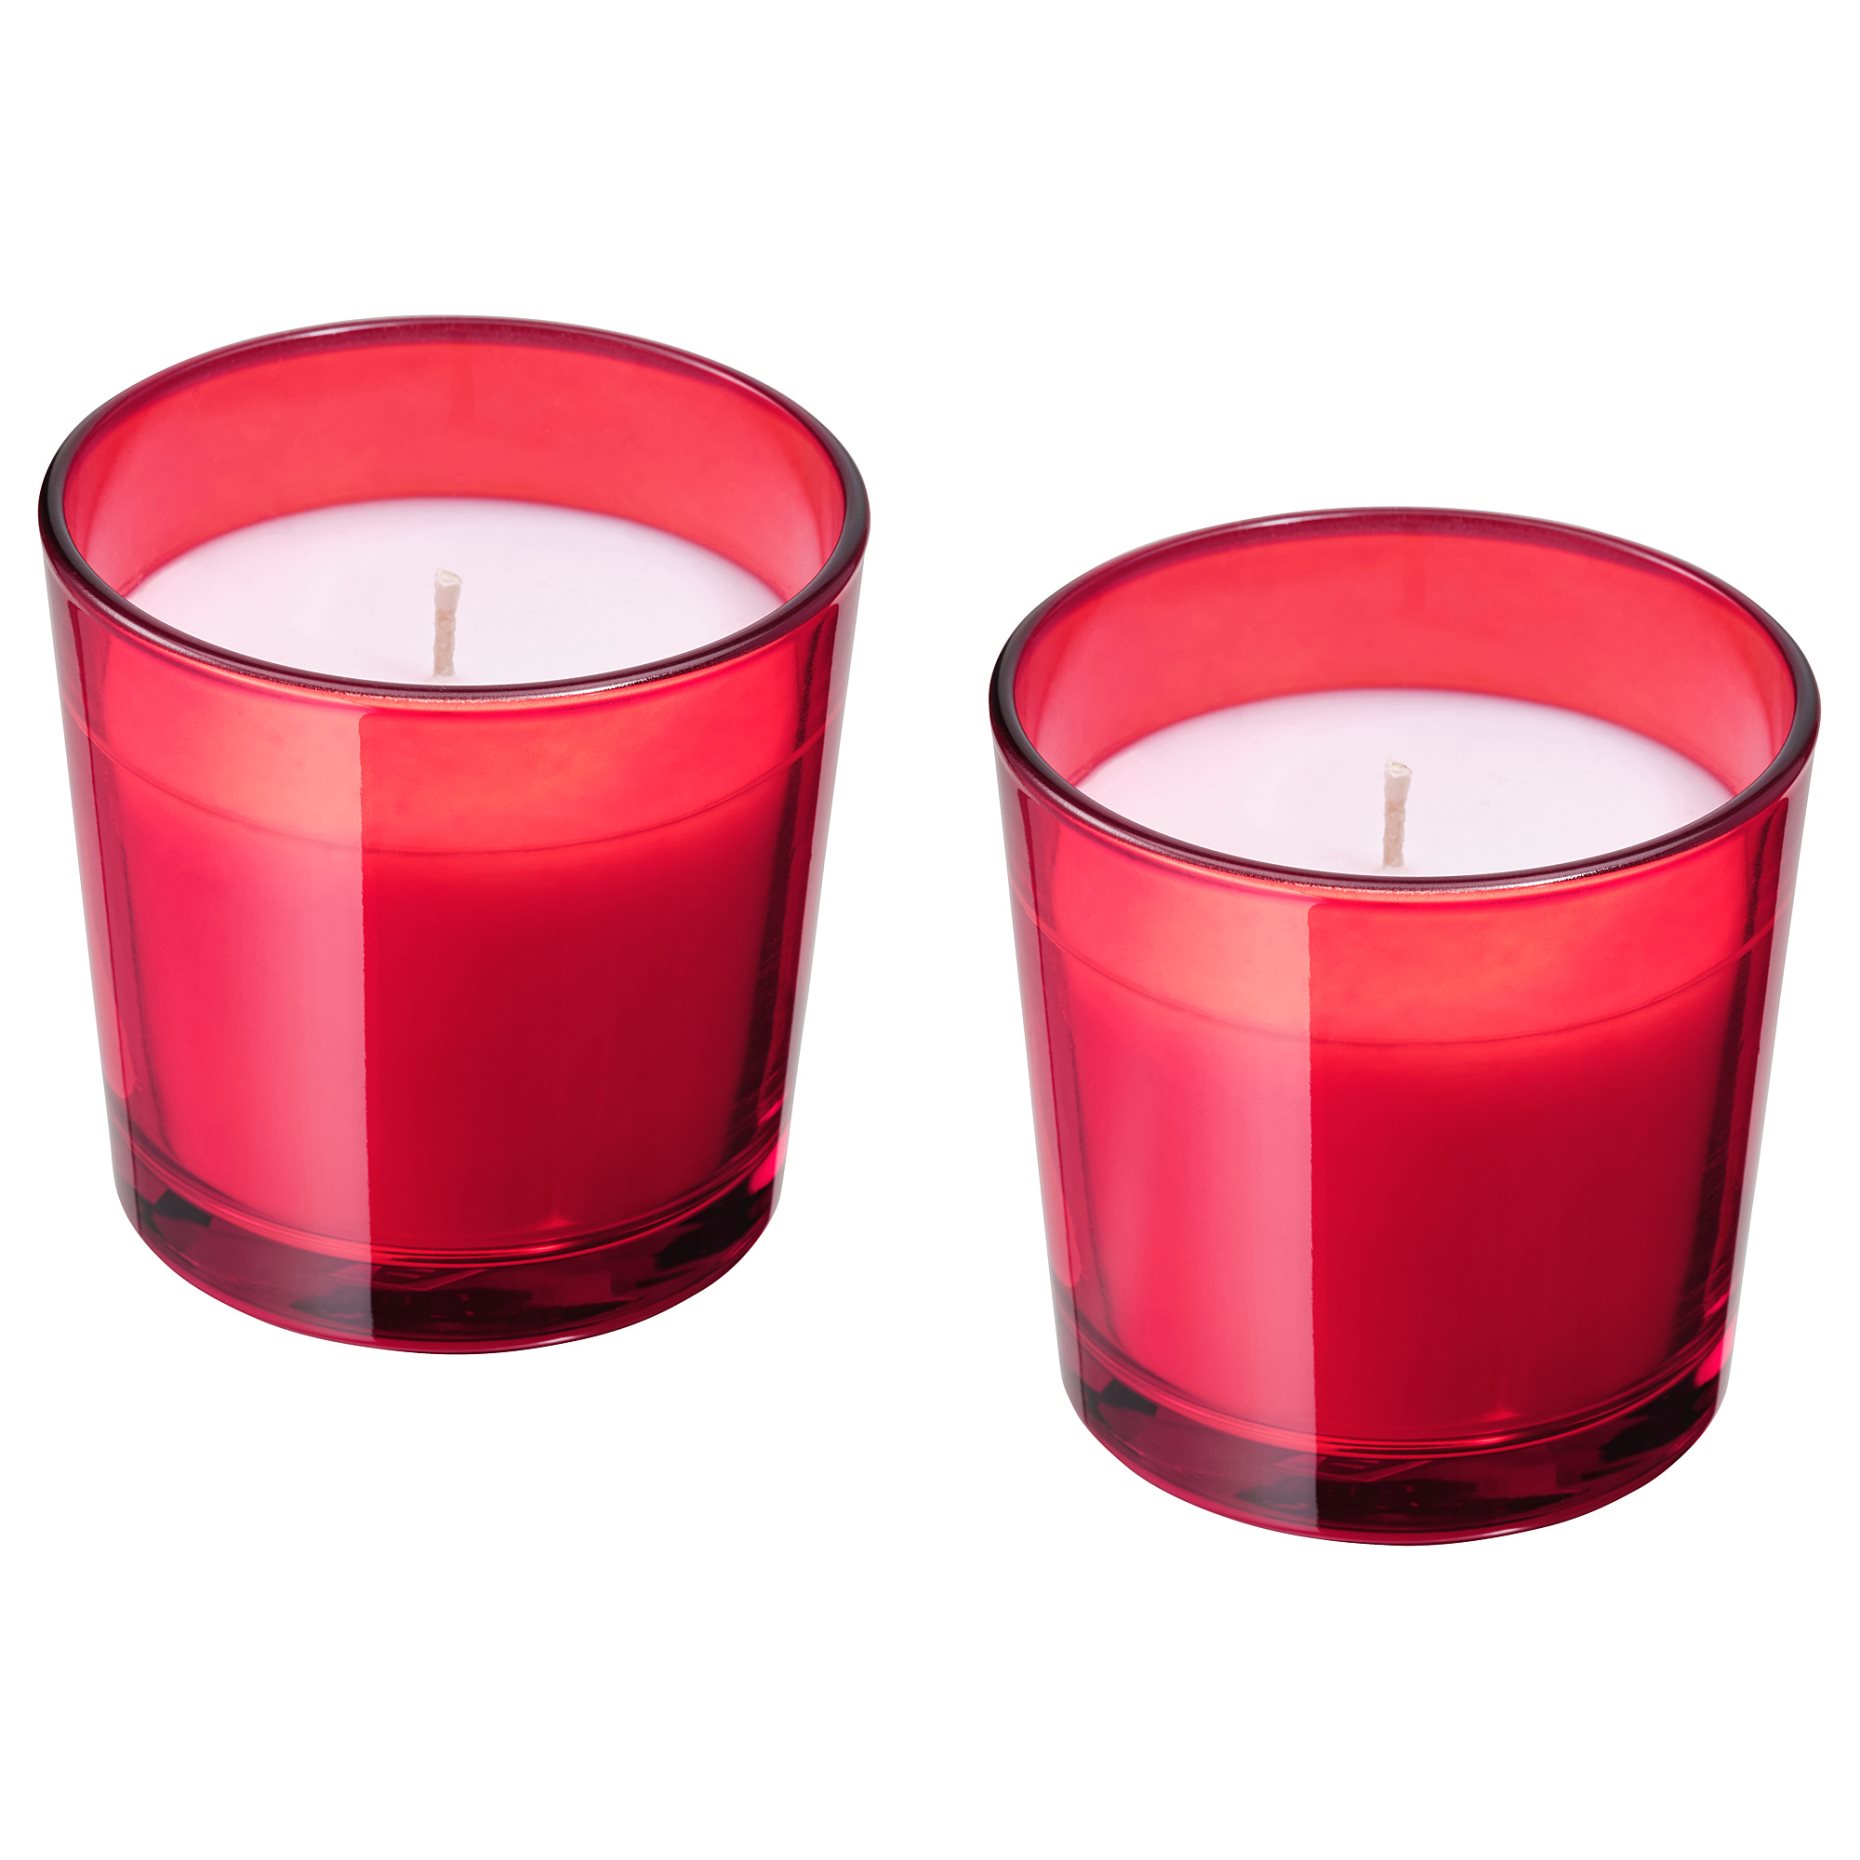 VINTERFINT, αρωματικό κερί σε ποτήρι/πέντε μπαχαρικά του χειμώνα, 2 τεμ. 25 hr, 705.245.52